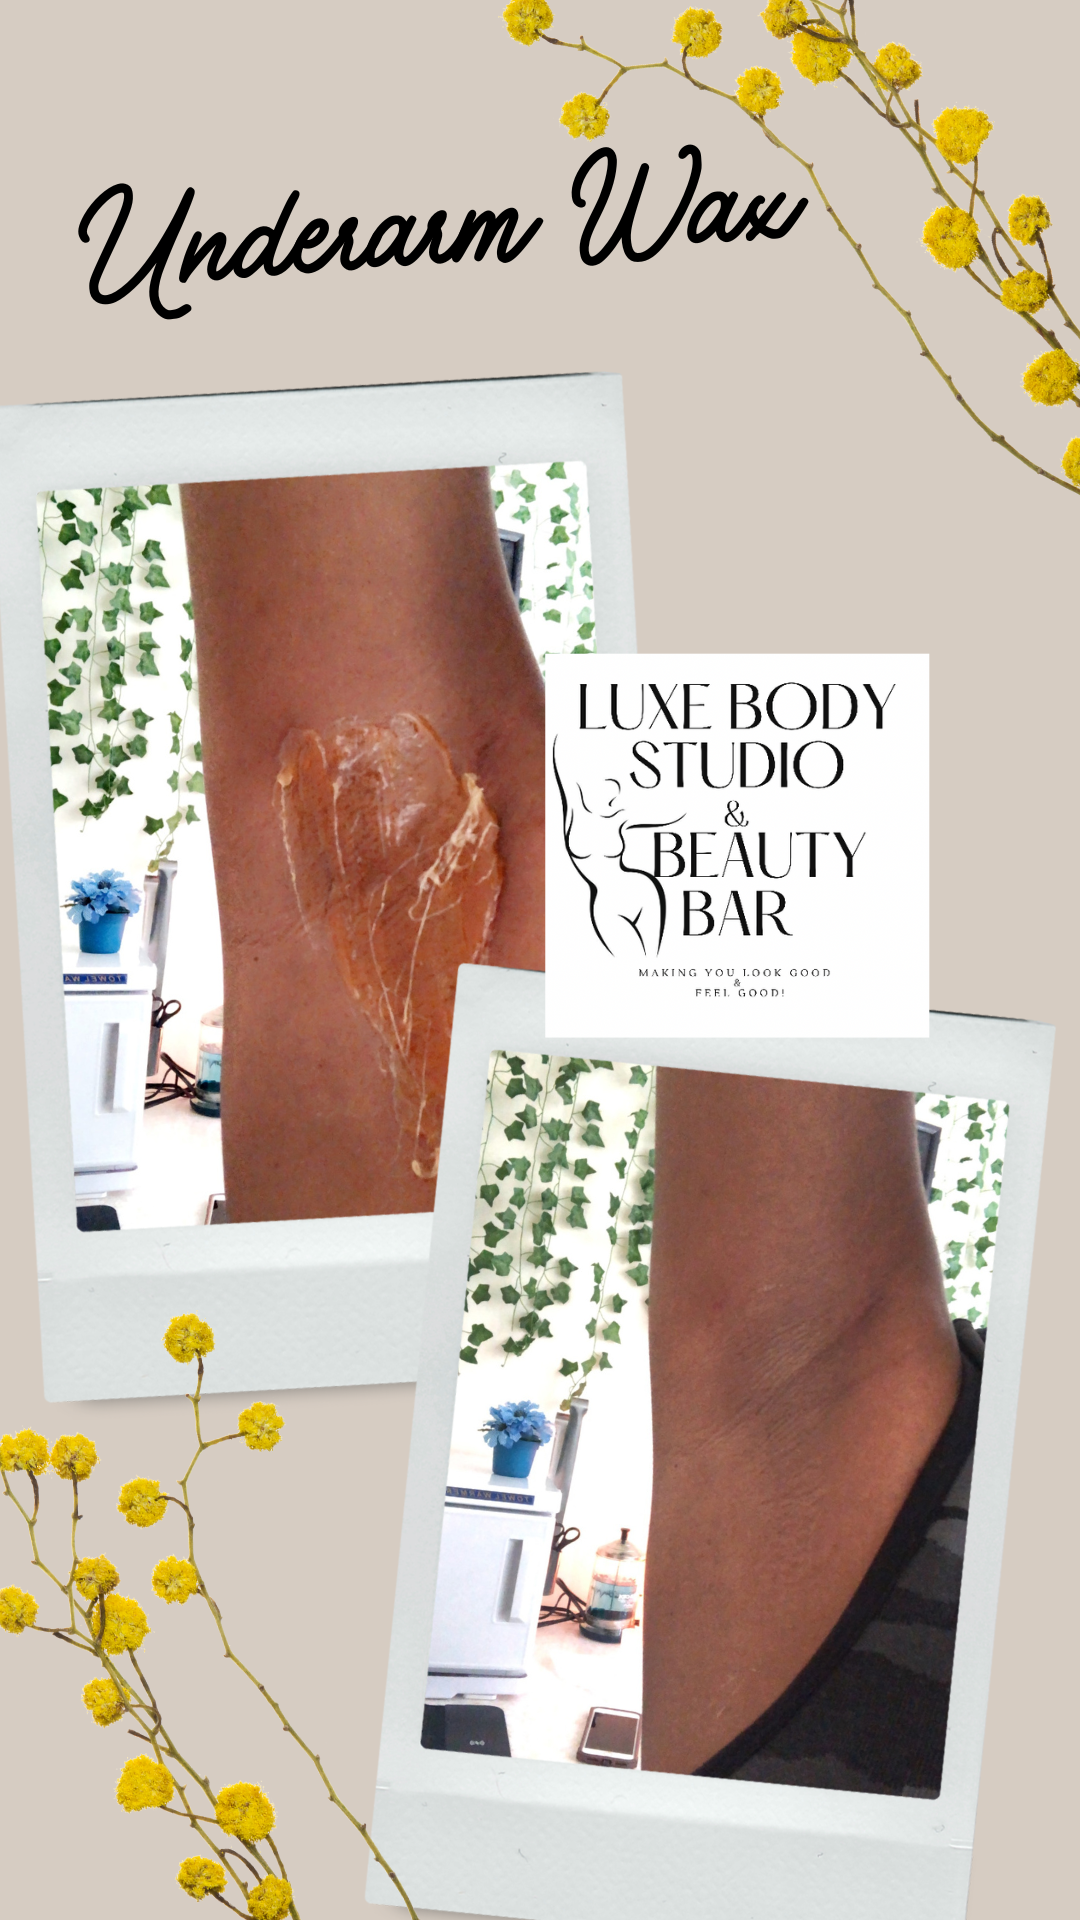 Luxe Body Studio & Beauty Bar